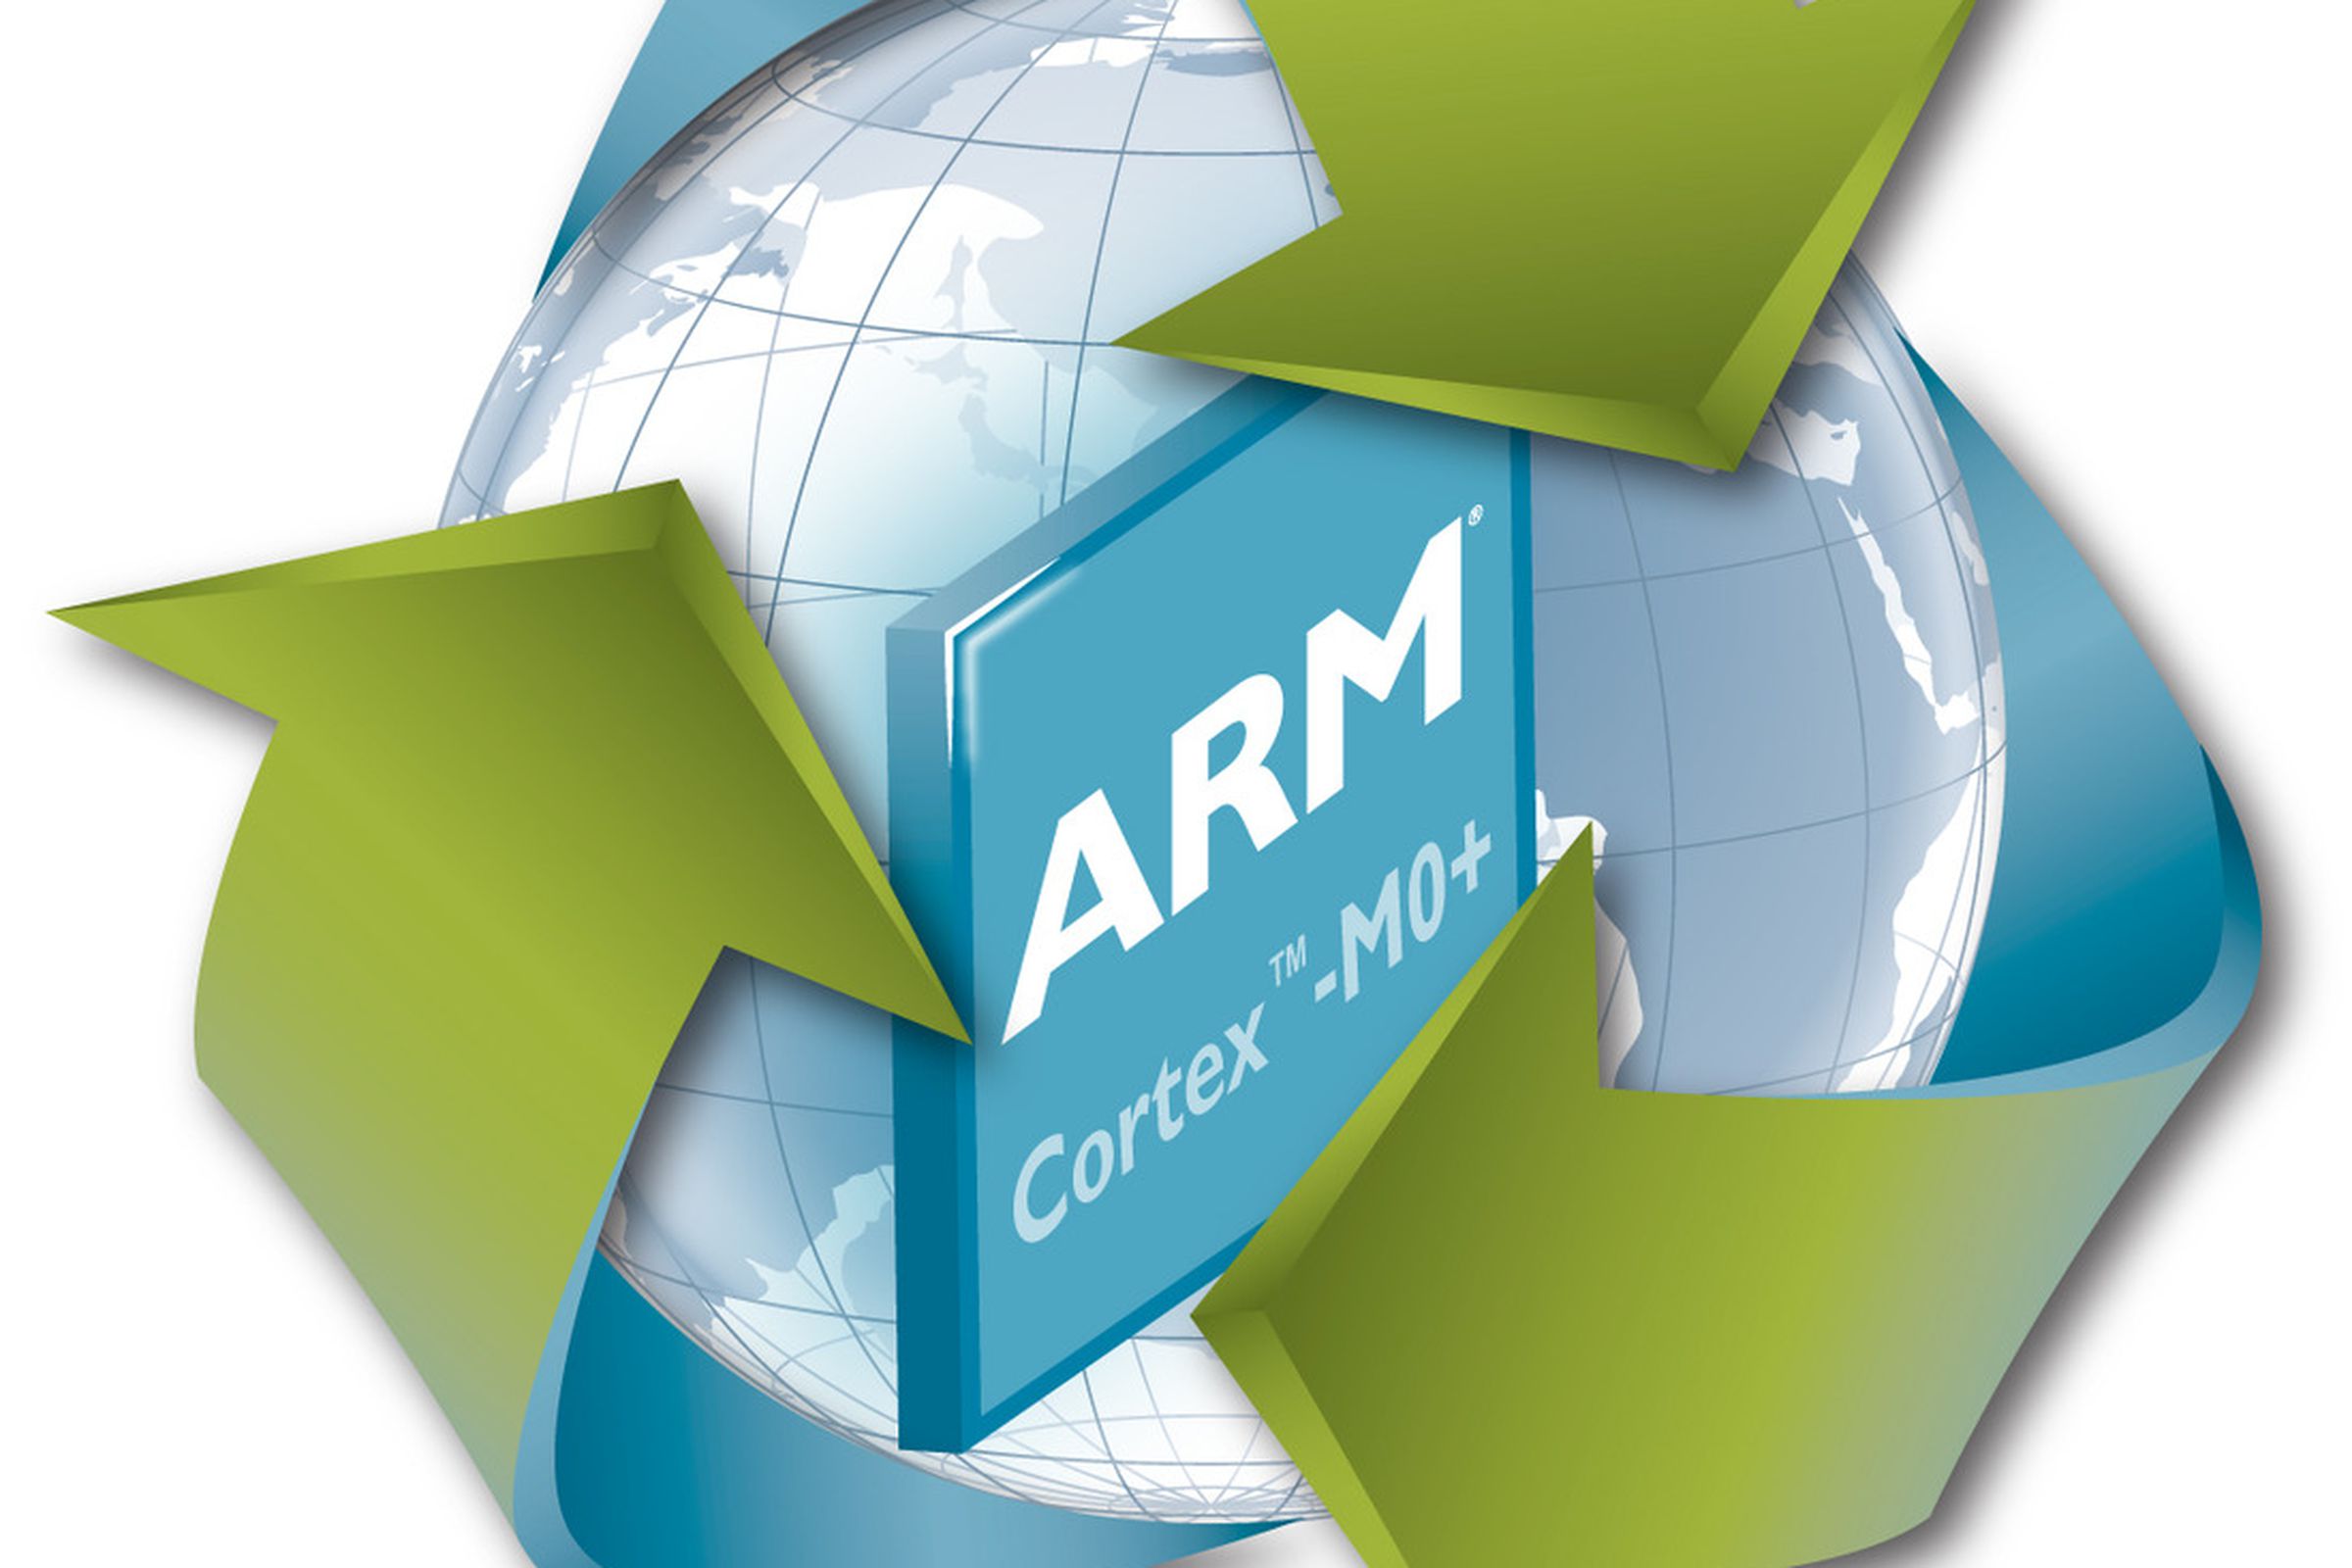 ARM Cortex-M0+